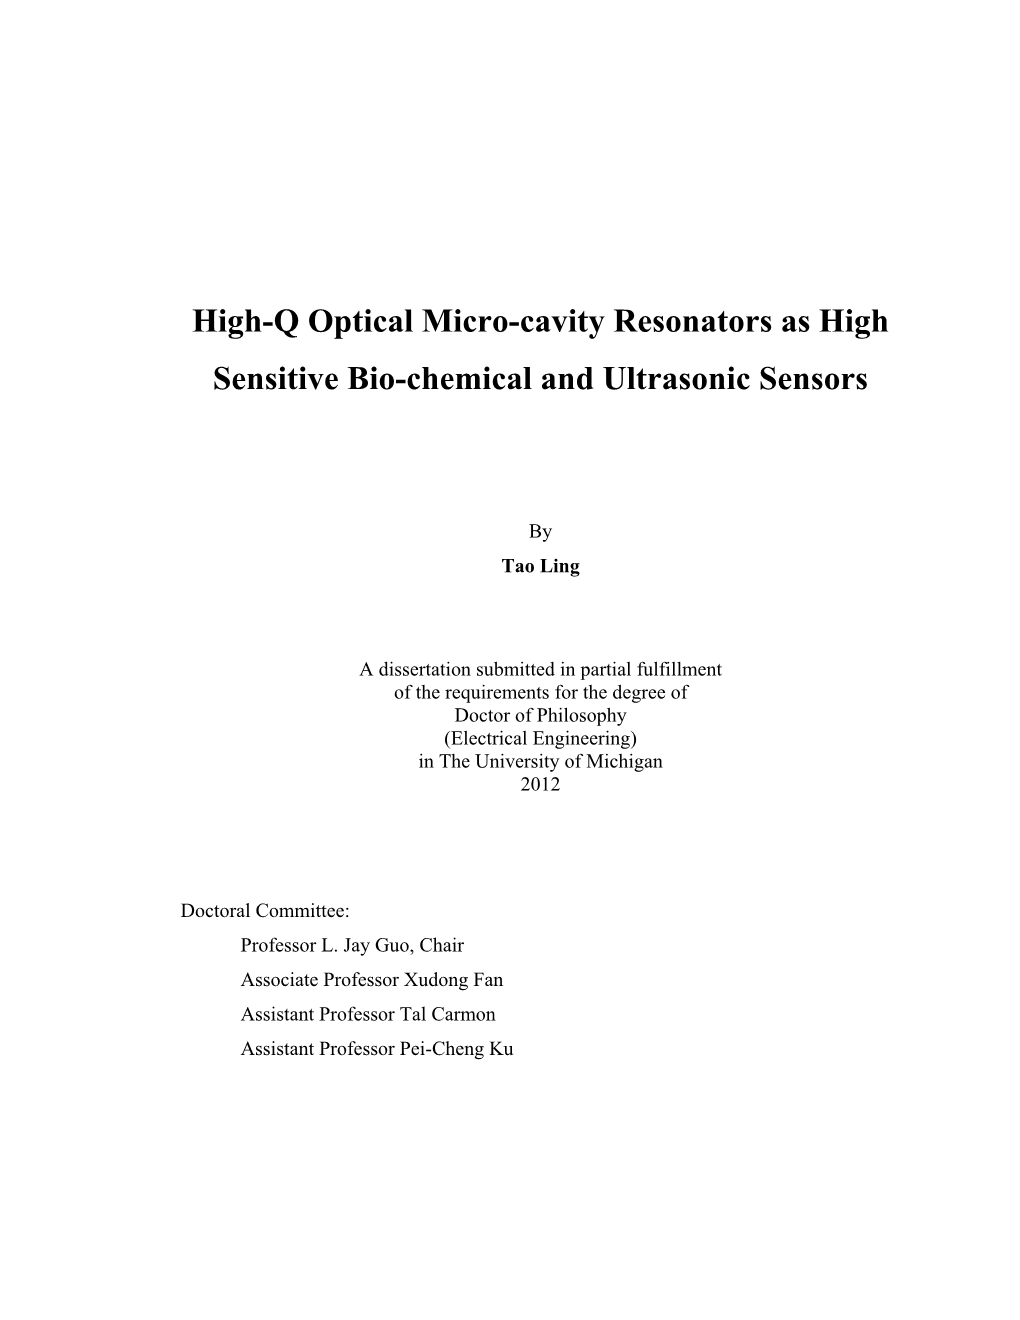 High-Q Optical Micro-Cavity Resonators As High Sensitive Bio-Chemical and Ultrasonic Sensors